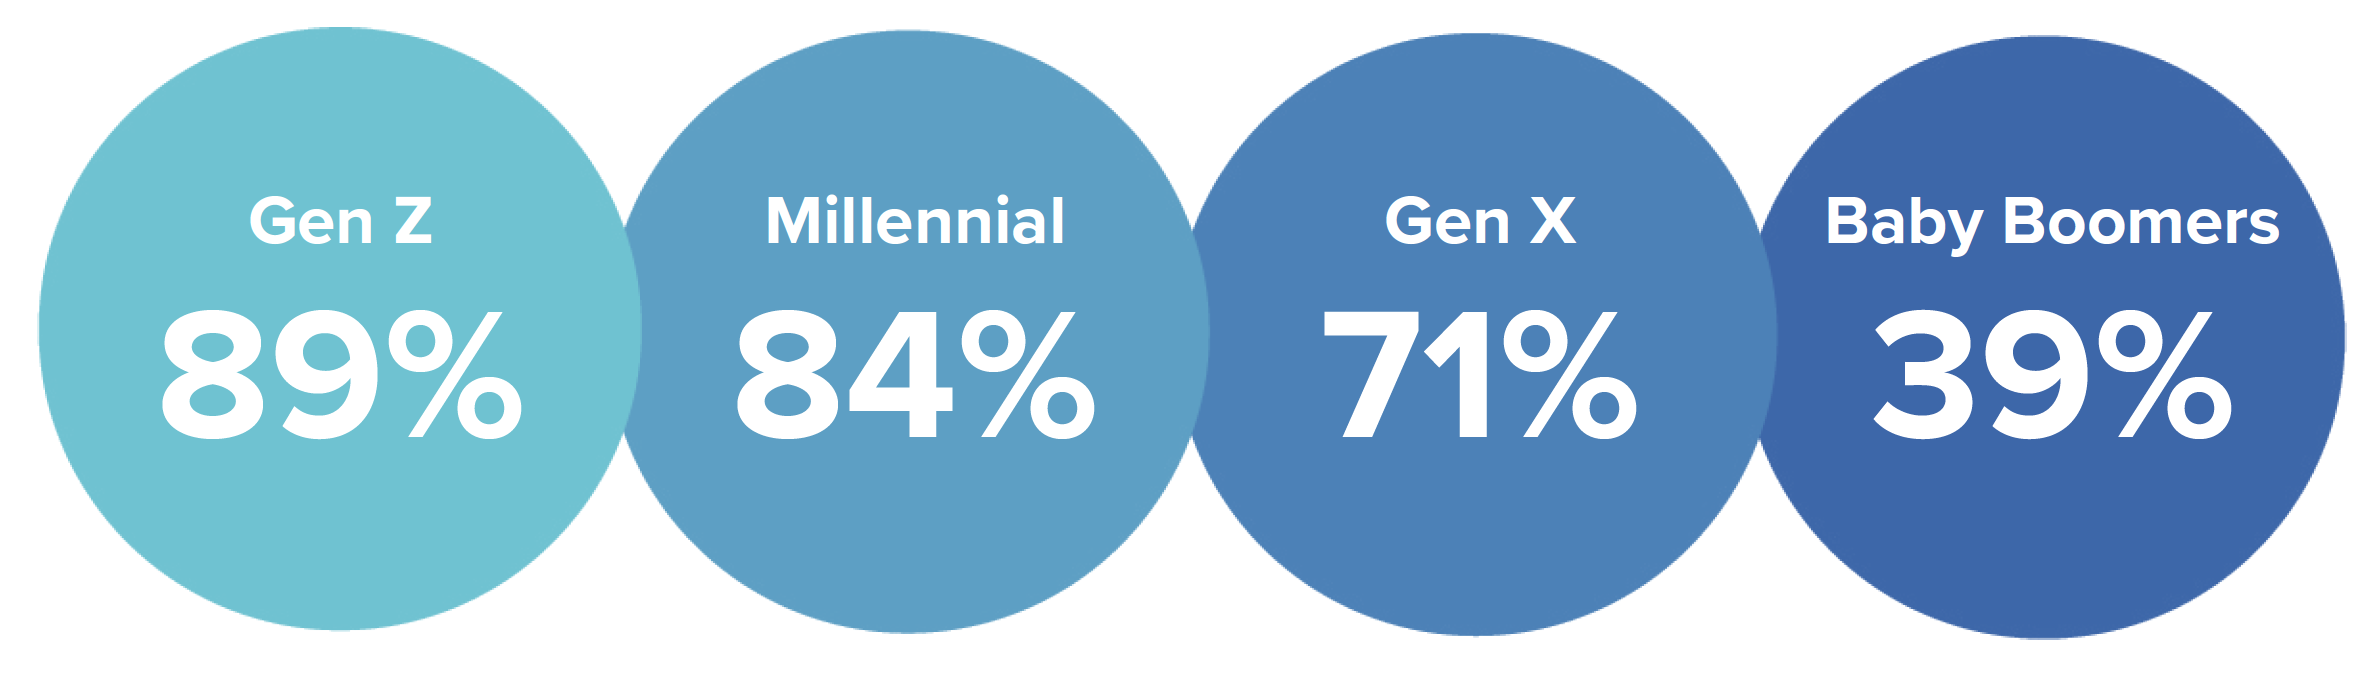 generational mobile financial app usage